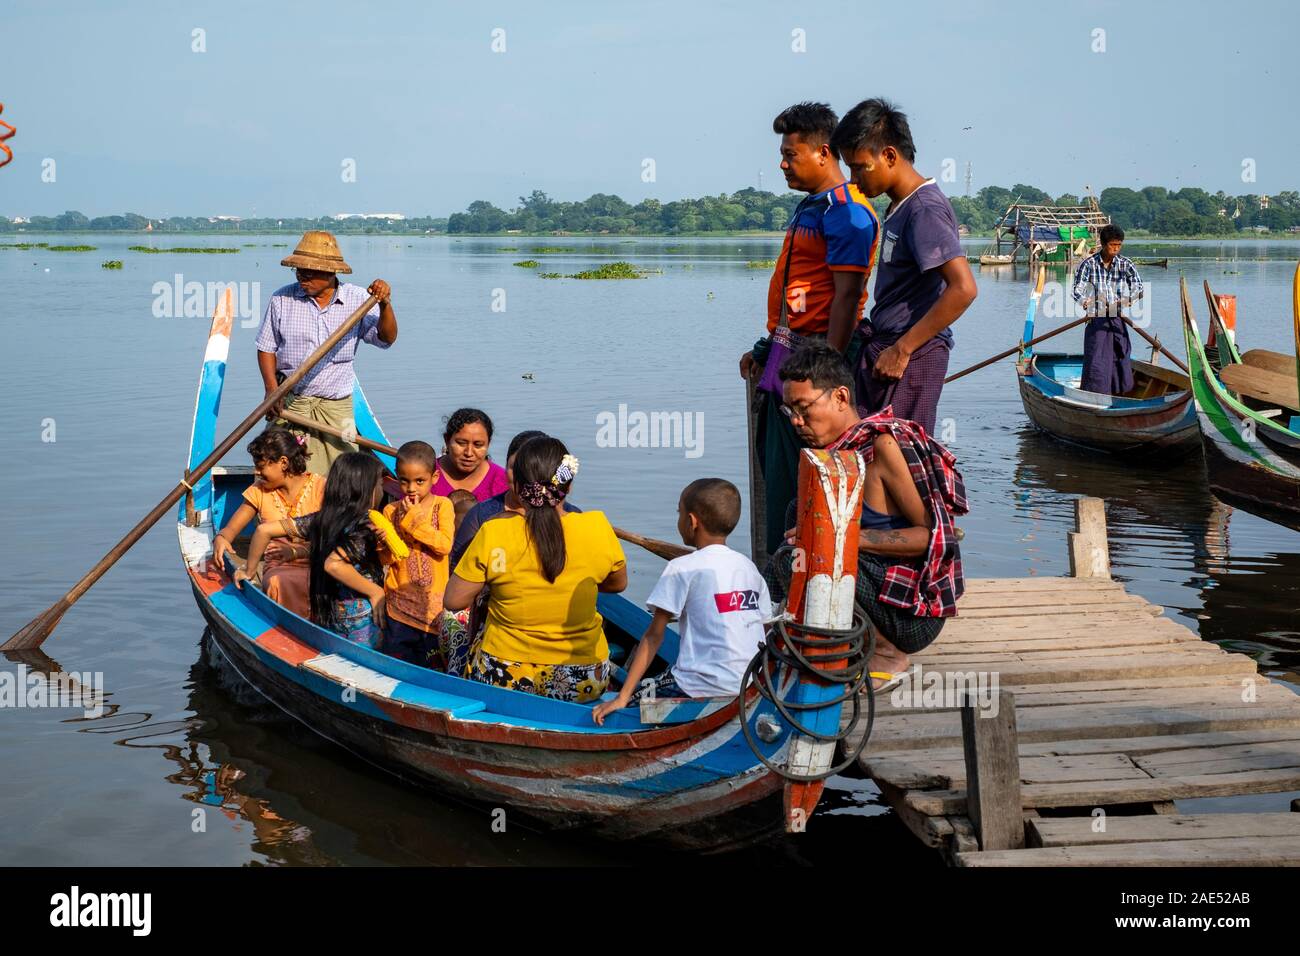 A large family climbs into a traditional Burmese boat to celebrate a local holiday on Lake Thaungthaman near Mandalay, Myanmar (Burma) Stock Photo